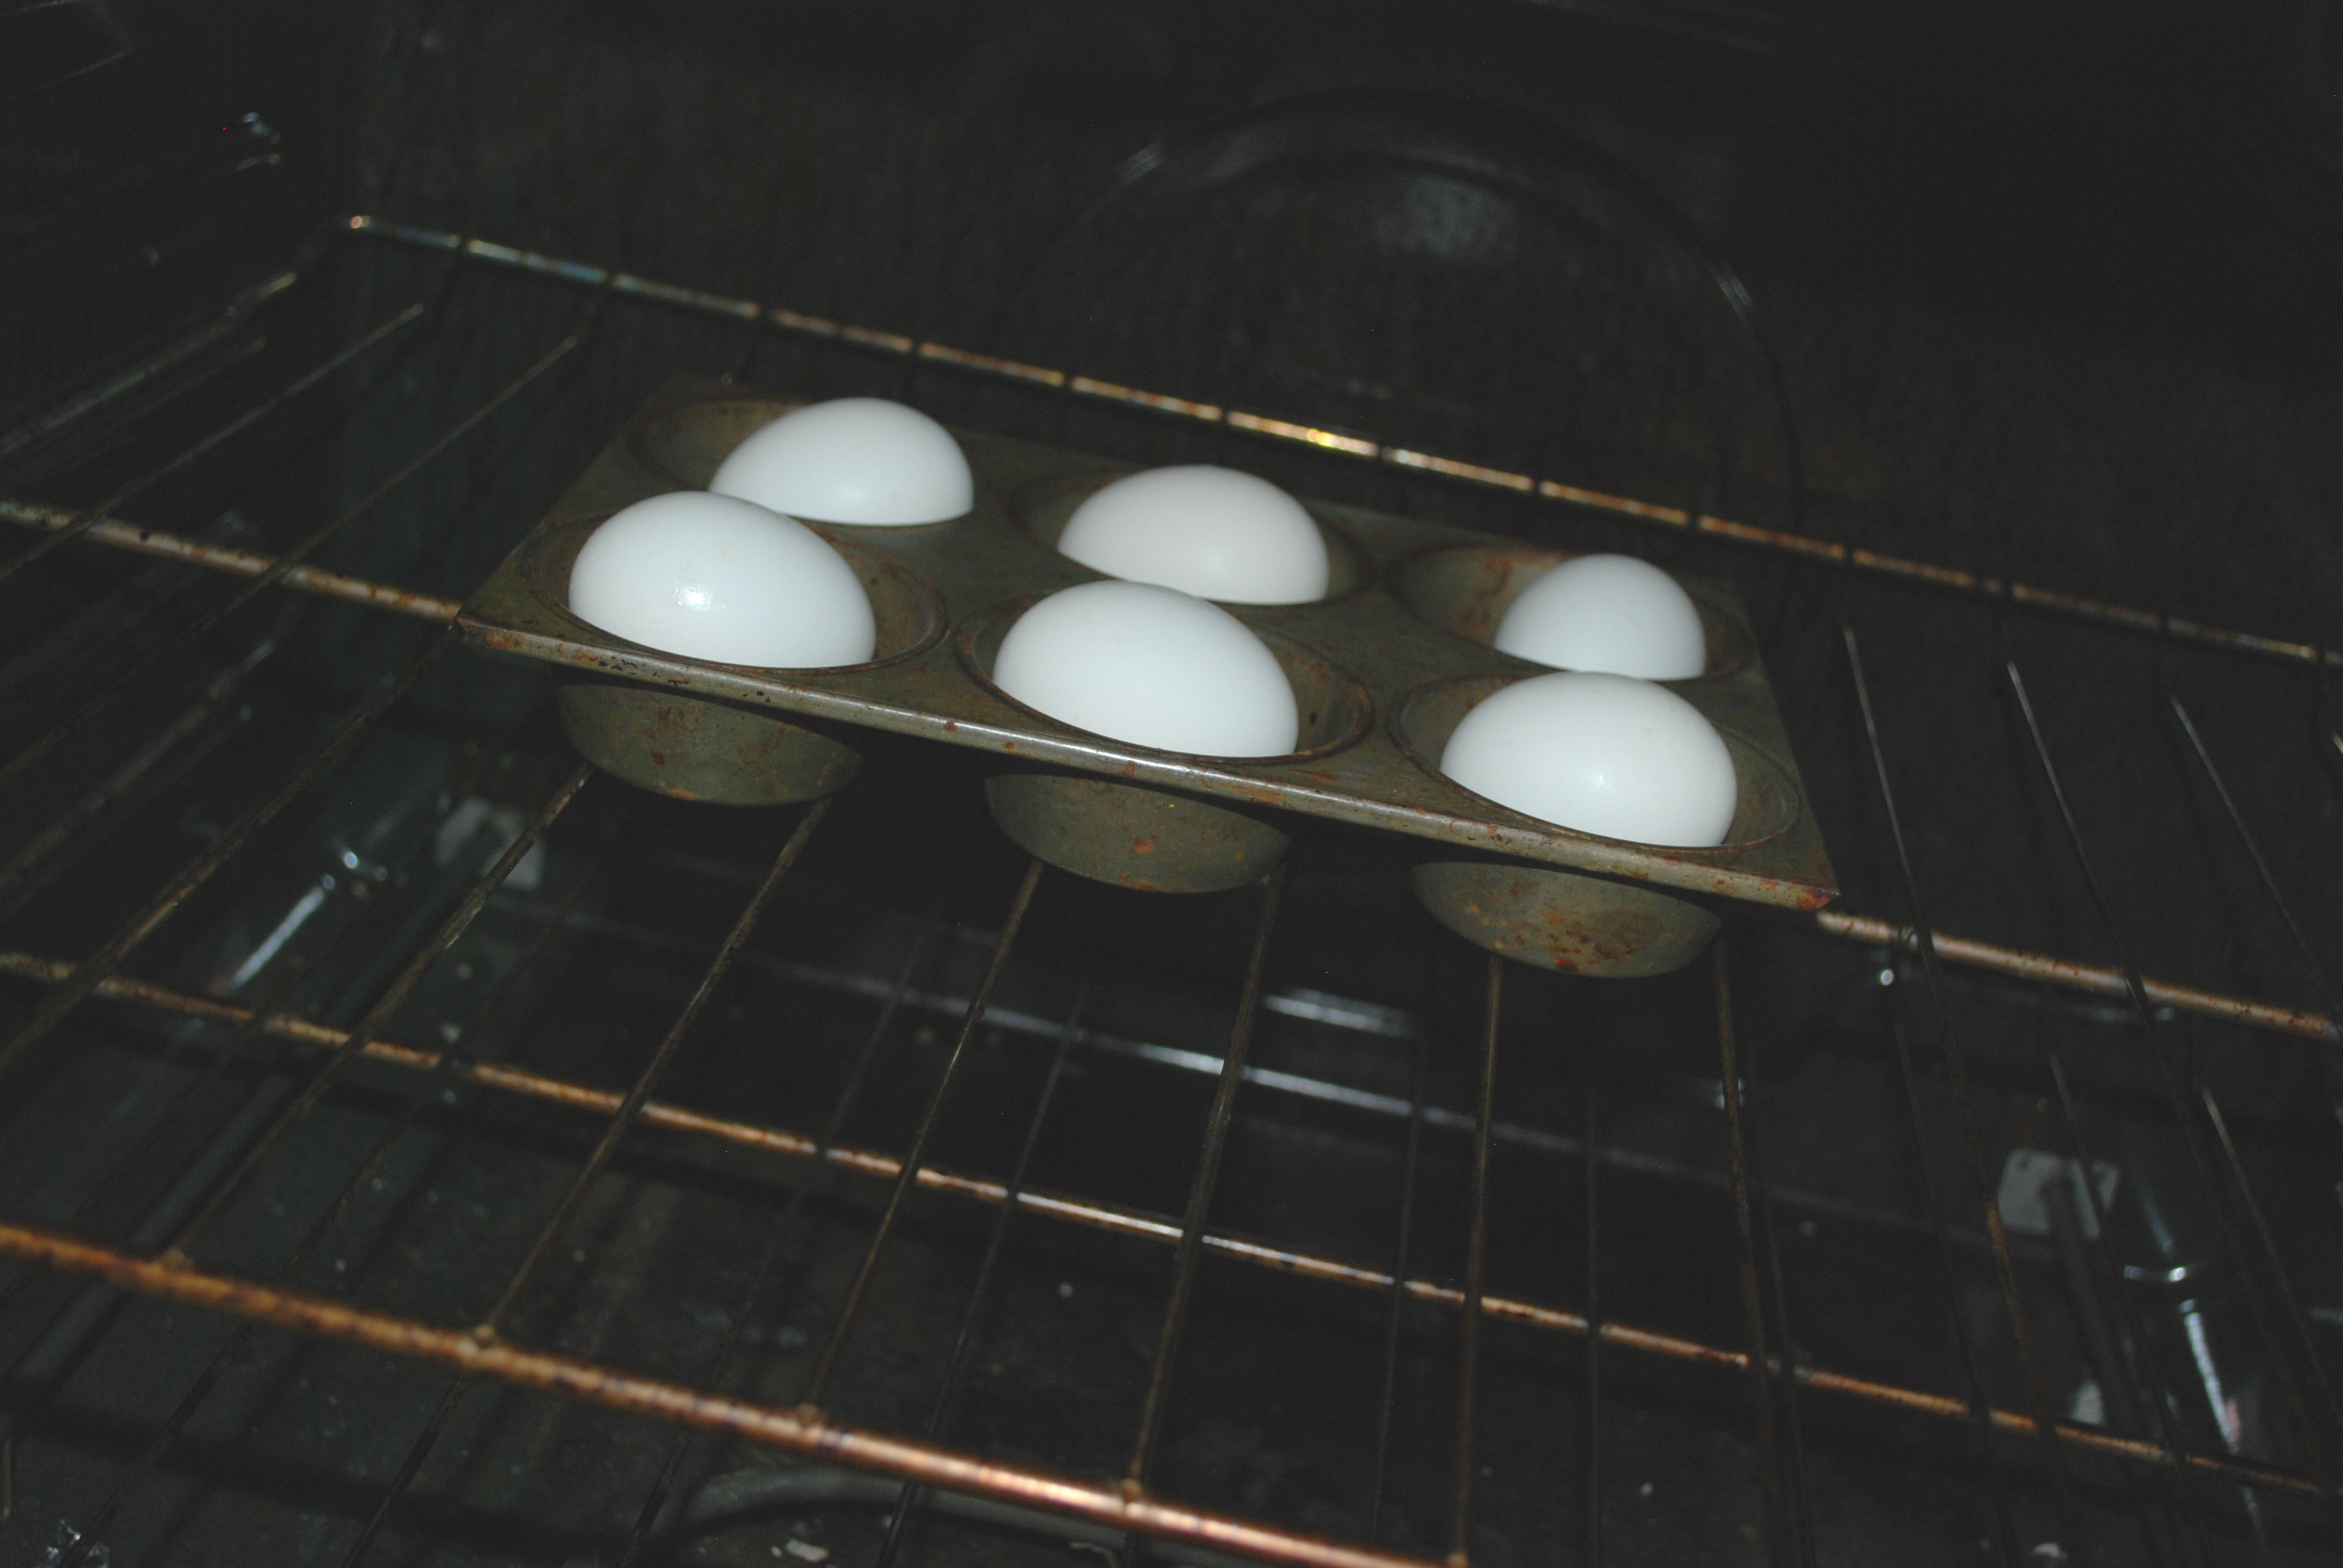 Oven baked eggs?